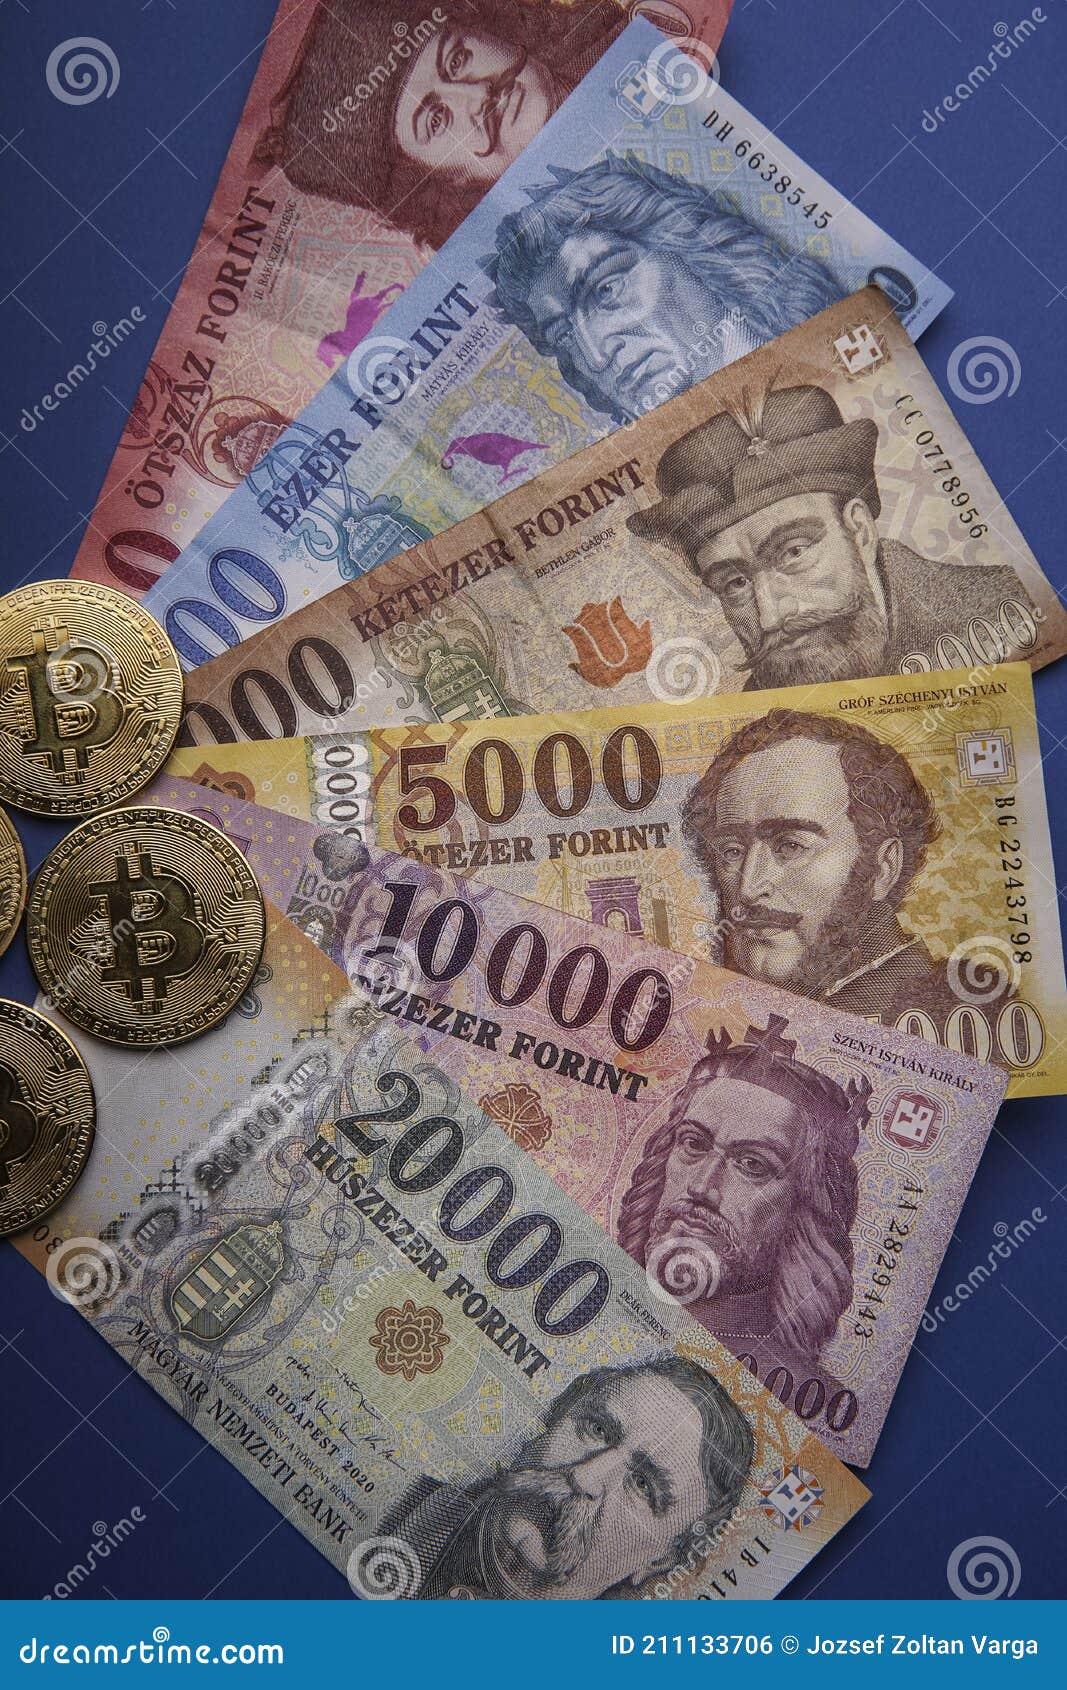 Namibian Dollar (NAD) to Panamanian Balboa (PAB) exchange rate history